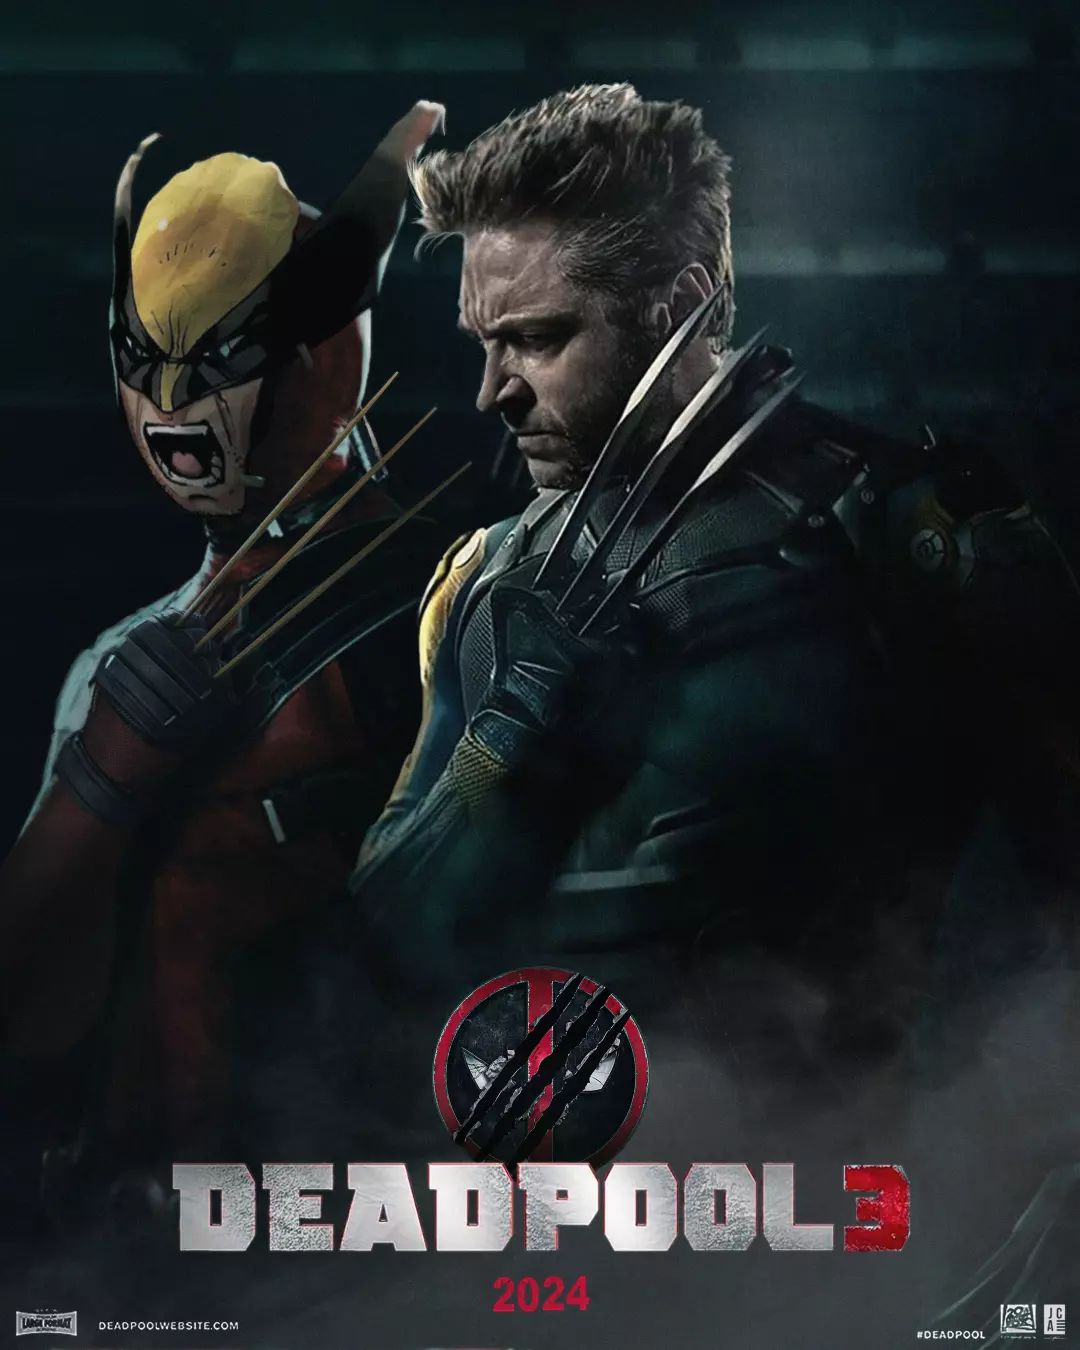 ArtStation - Deadpool 3 poster concept #2